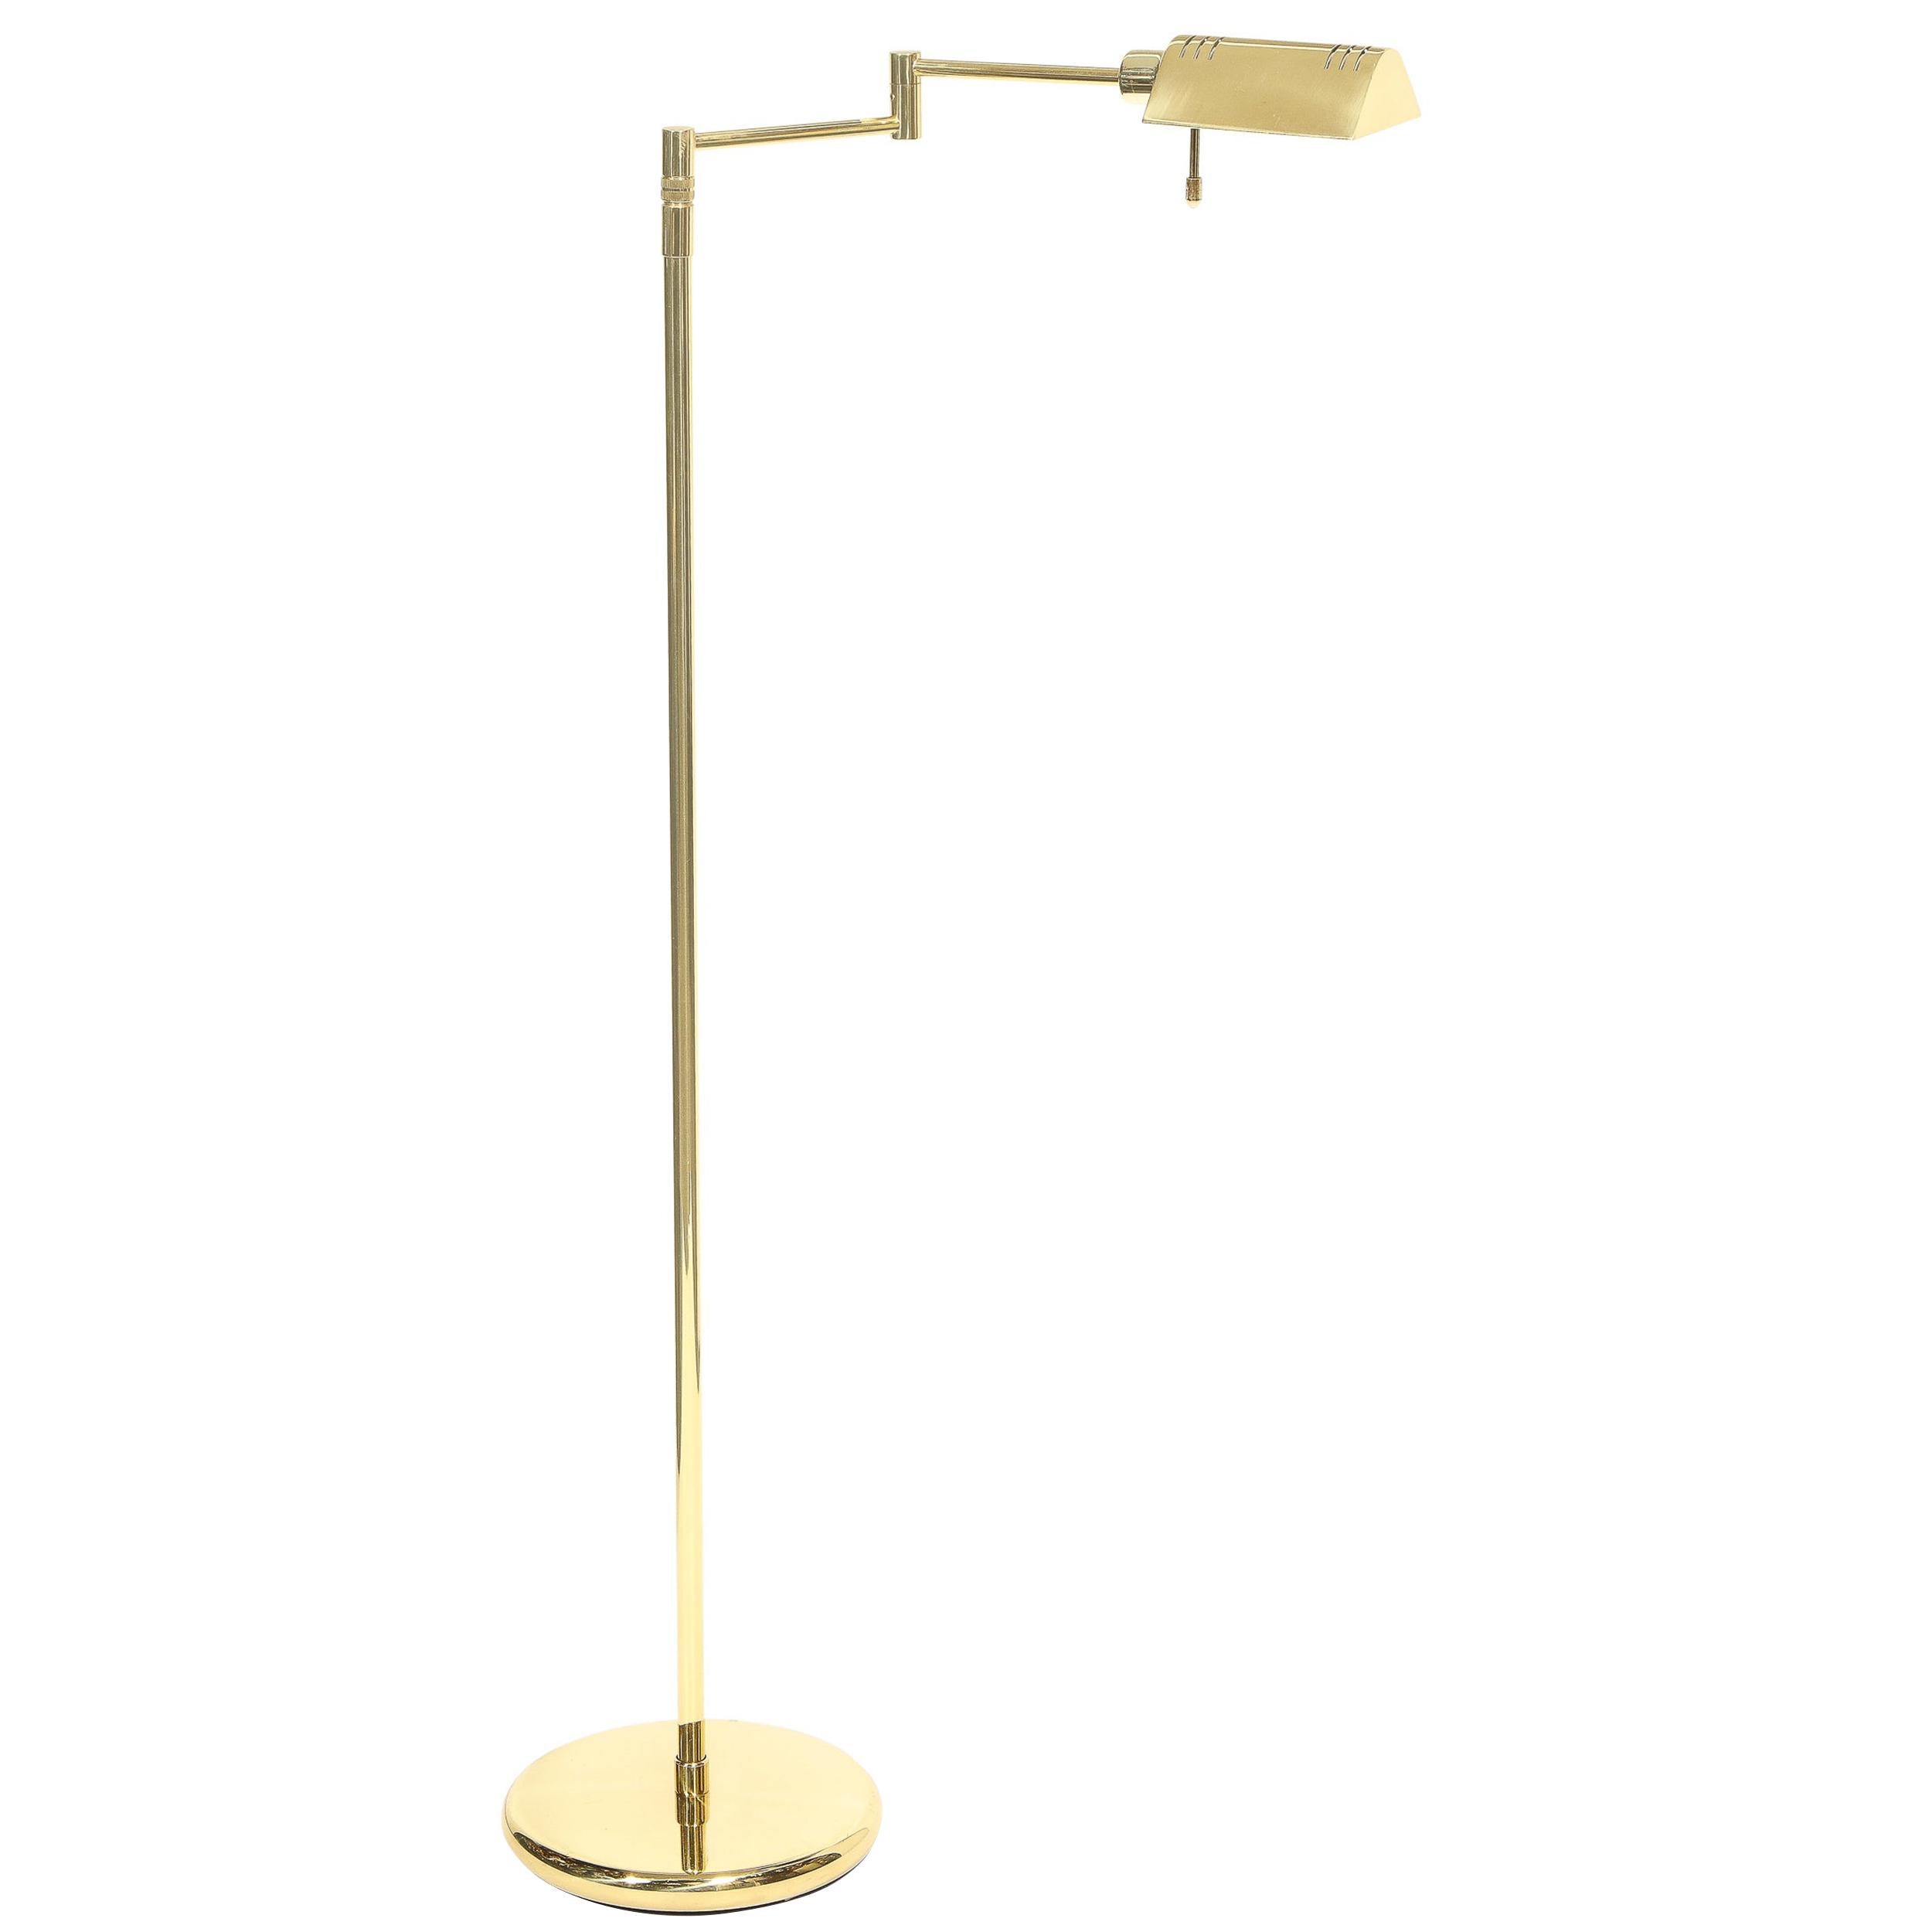 Midcentury Articulating Adjustable Peaked Shade Polished Brass Floor Lamp